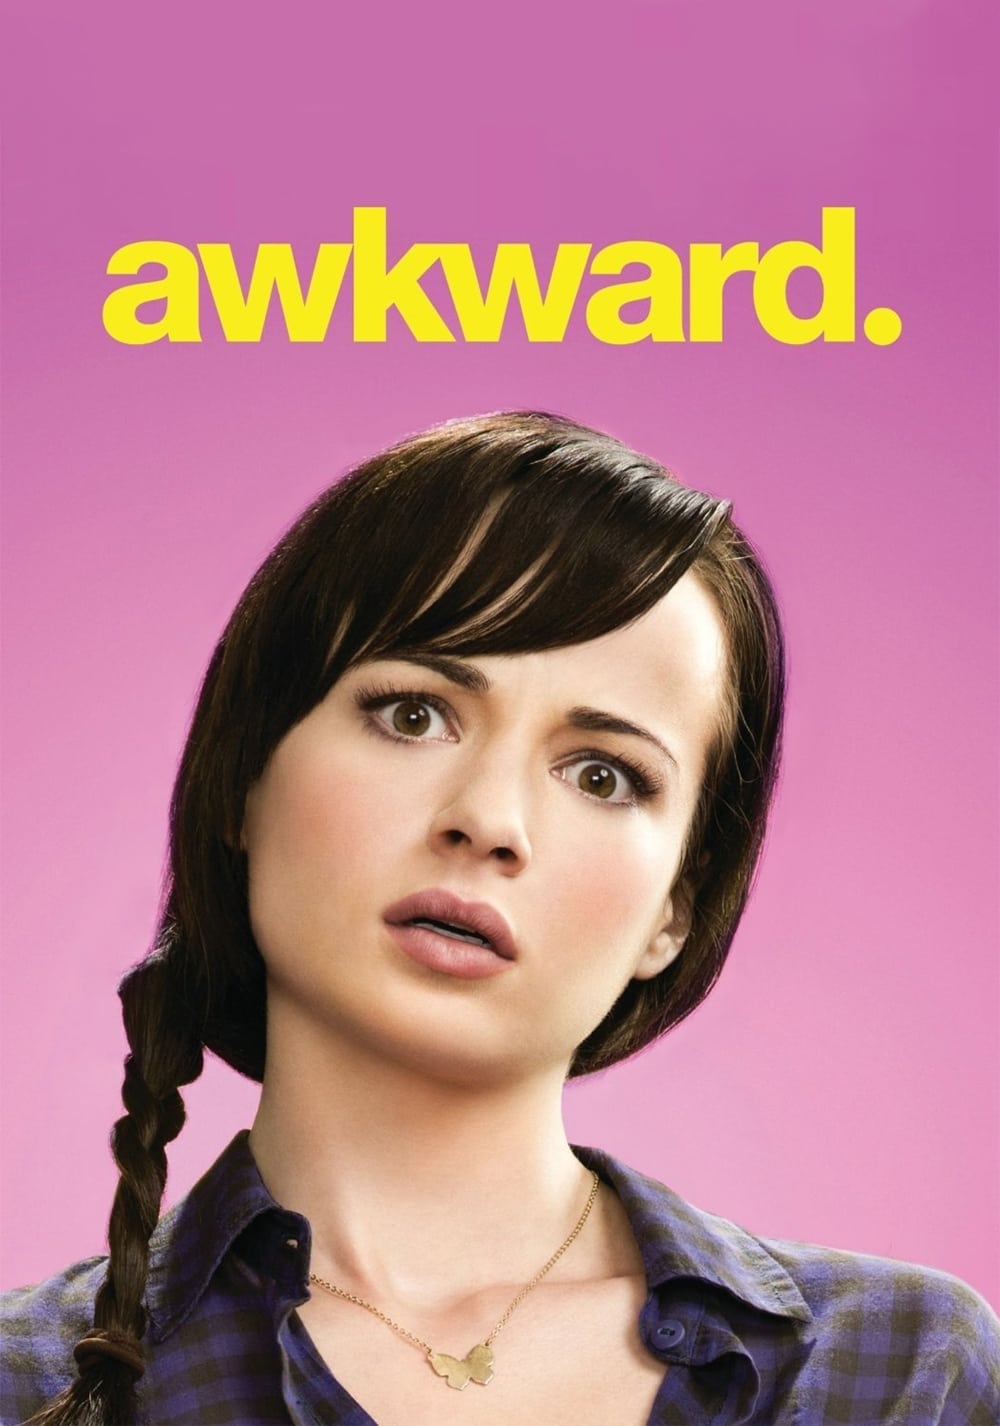 Awkward - Mein sogenanntes Leben (2011)